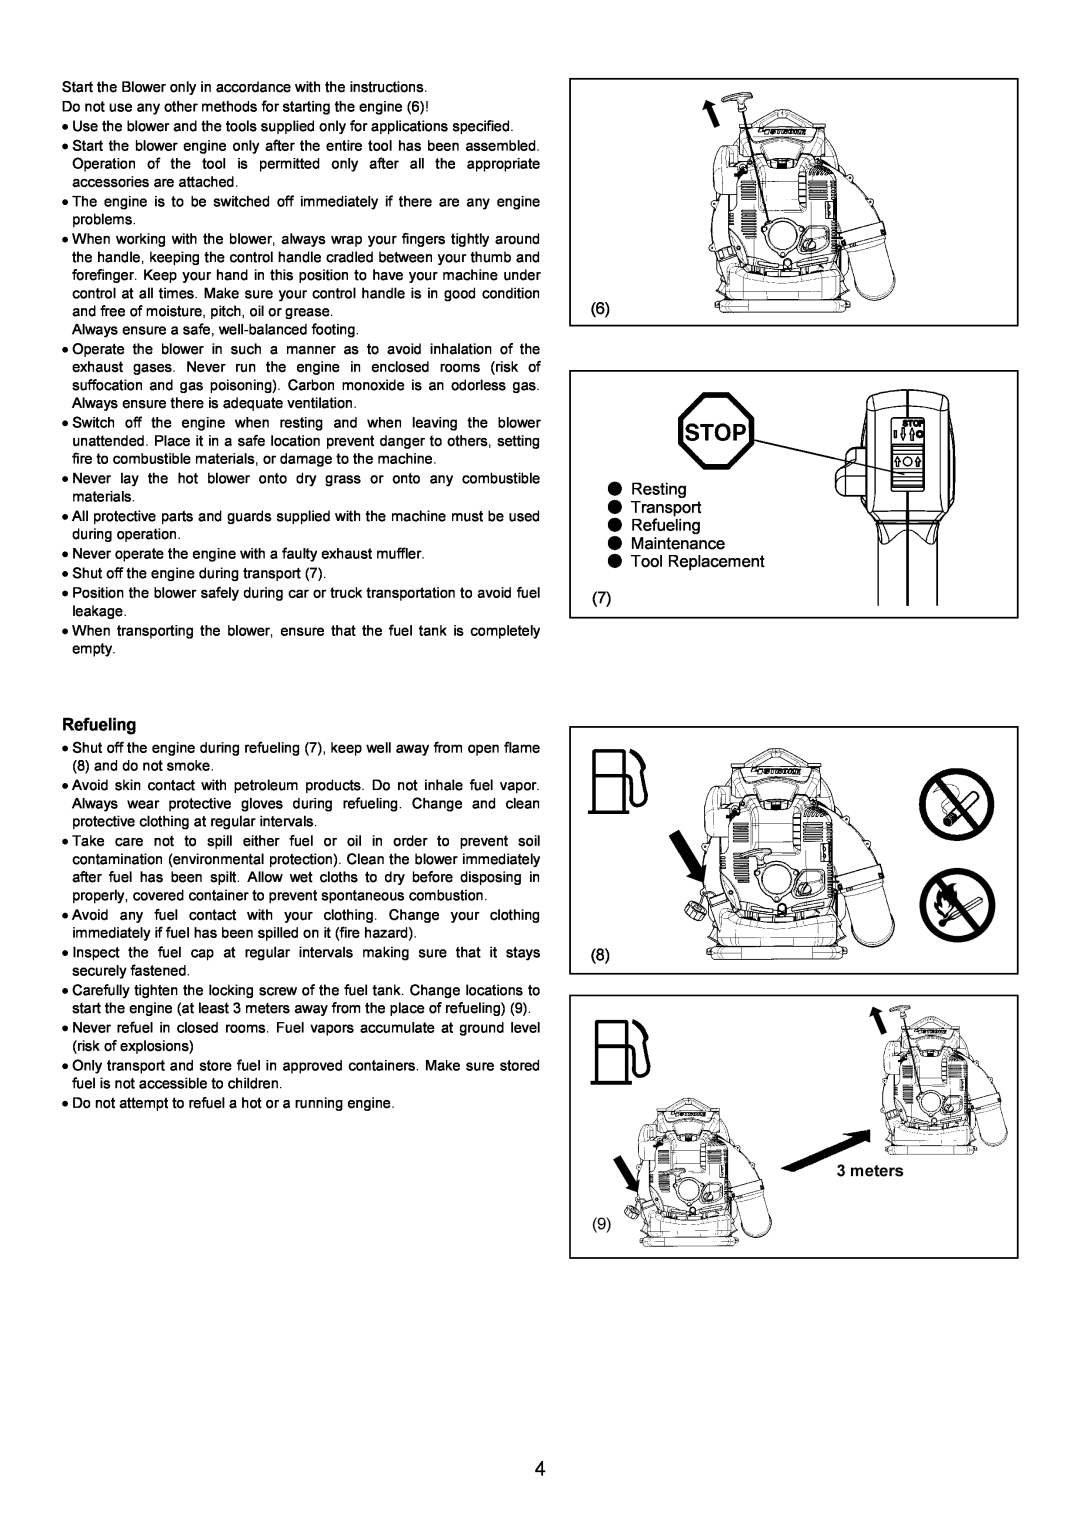 Makita BBX7600CA instruction manual Resting Transport Refueling Maintenance Tool Replacement, meters 